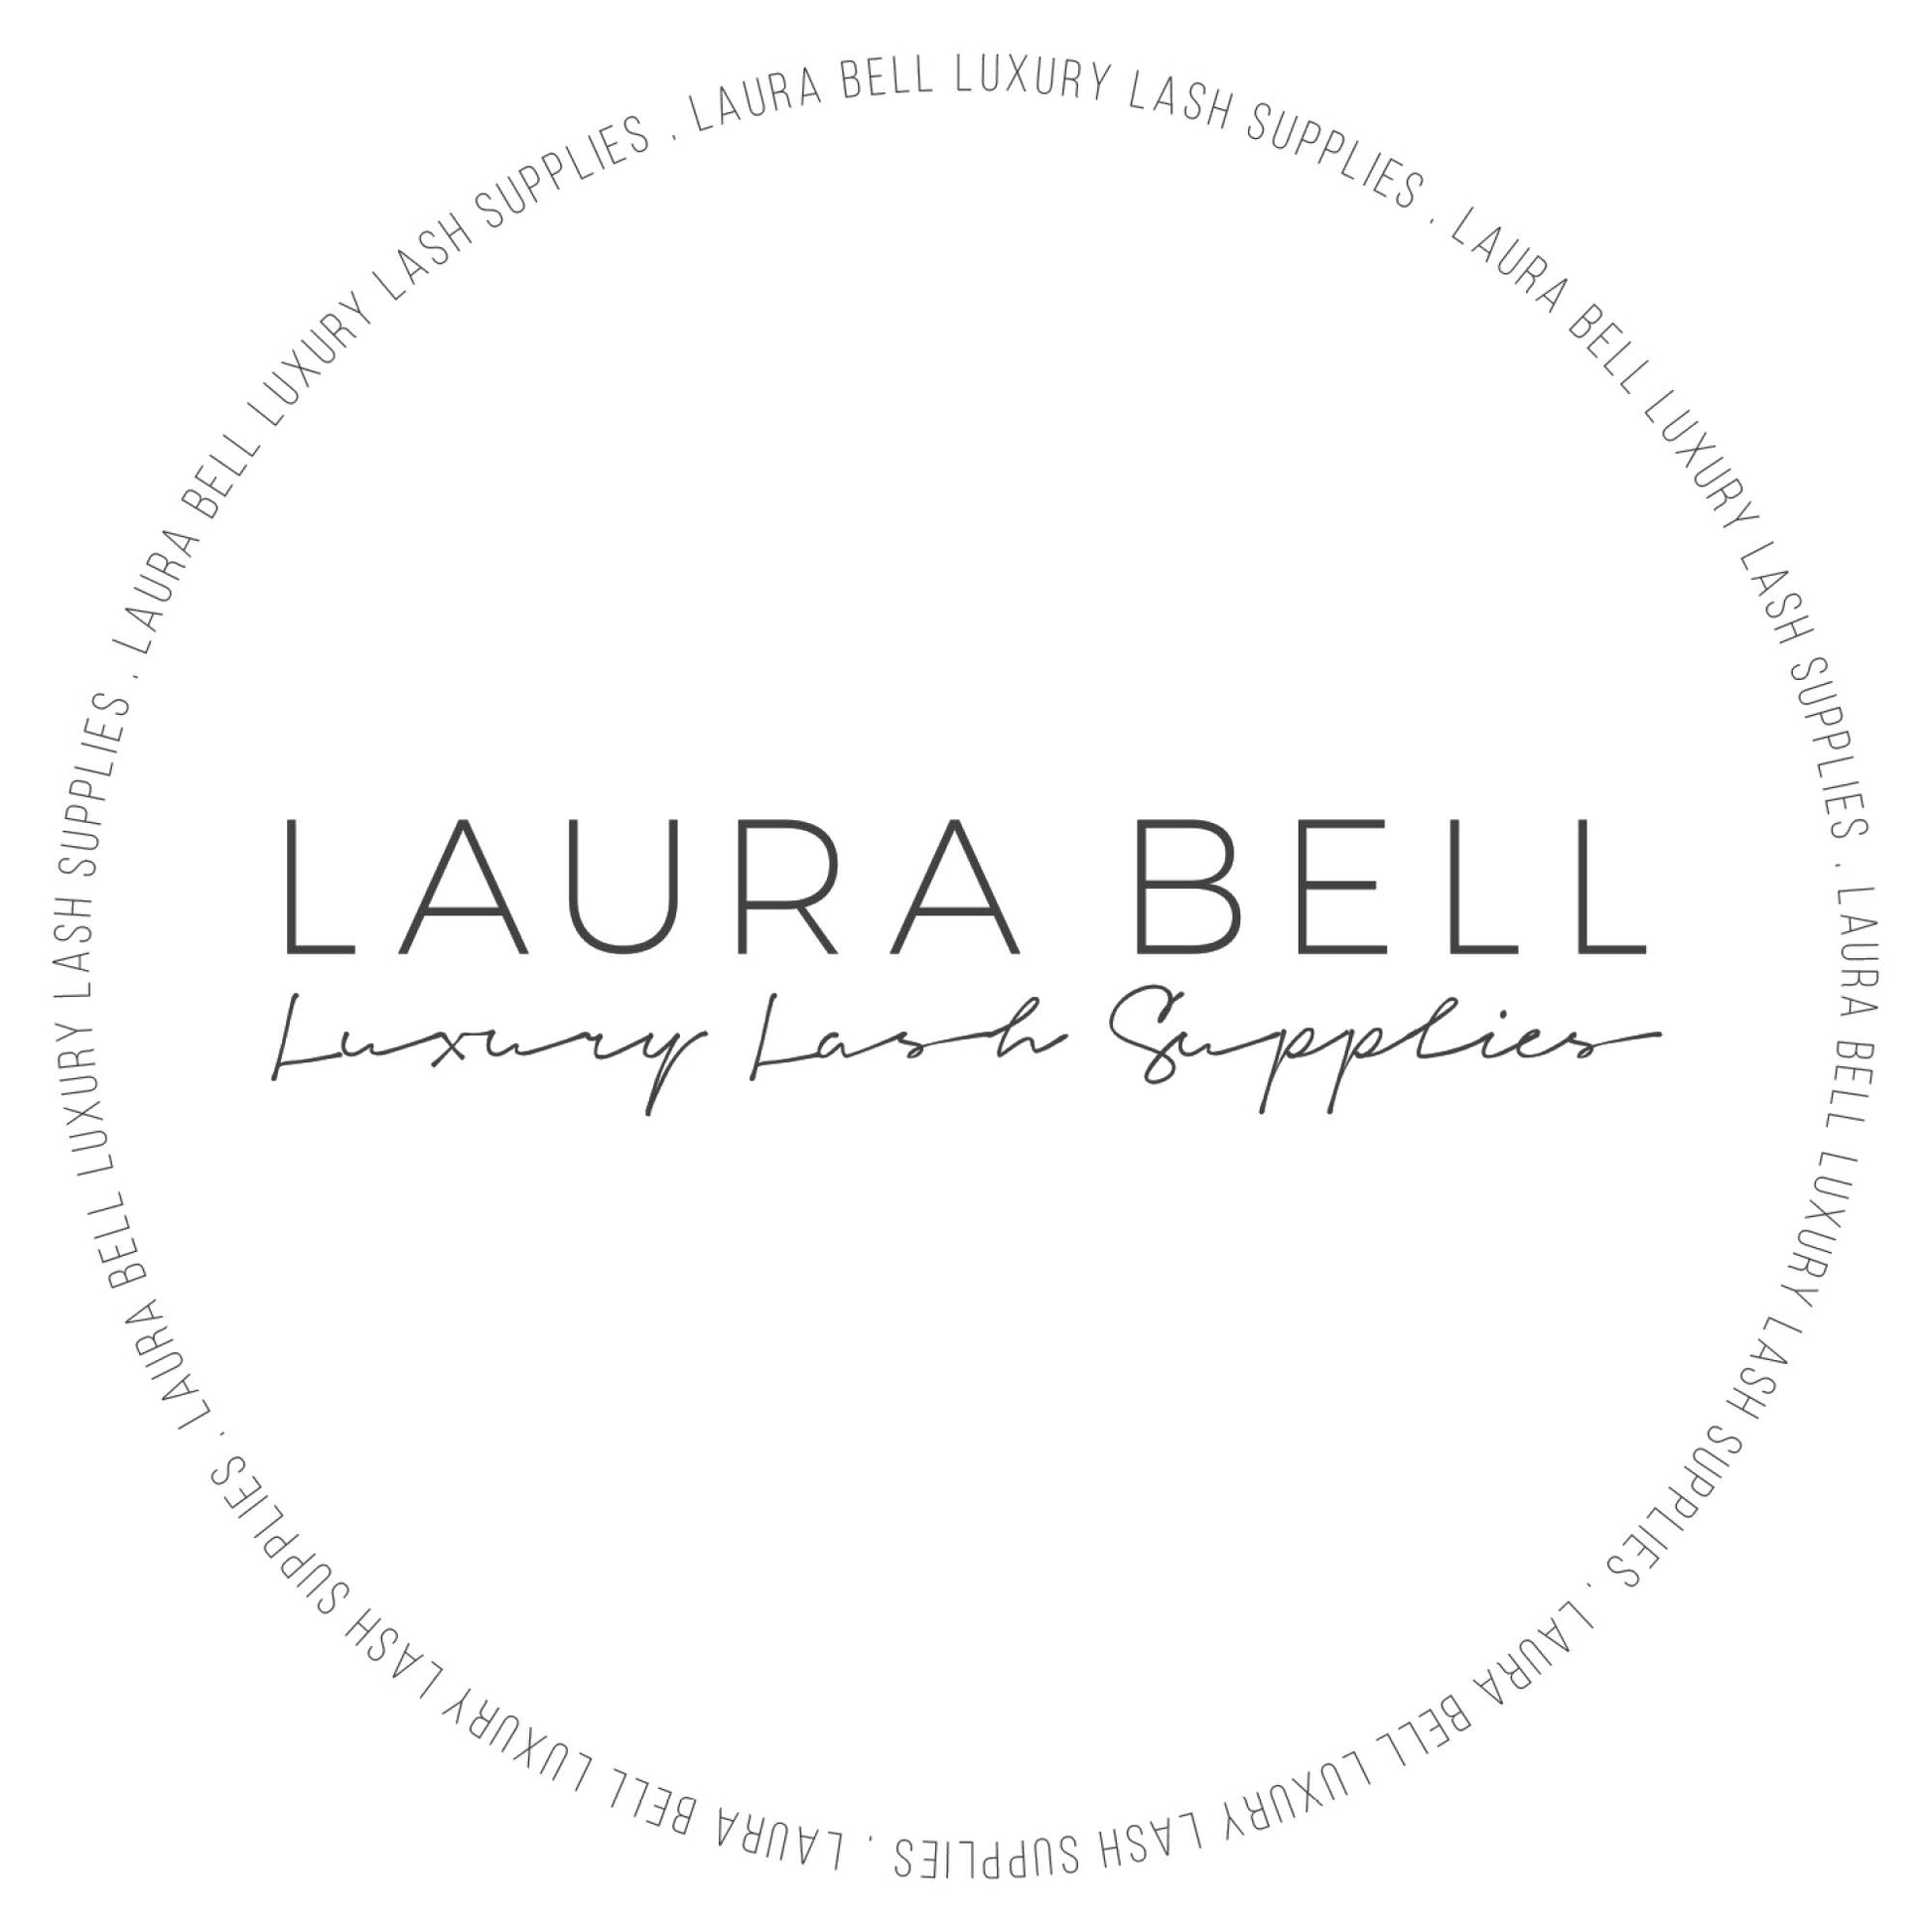 Classic Lash Student Kit Standard - Laura Bell Luxury Lash Supplies